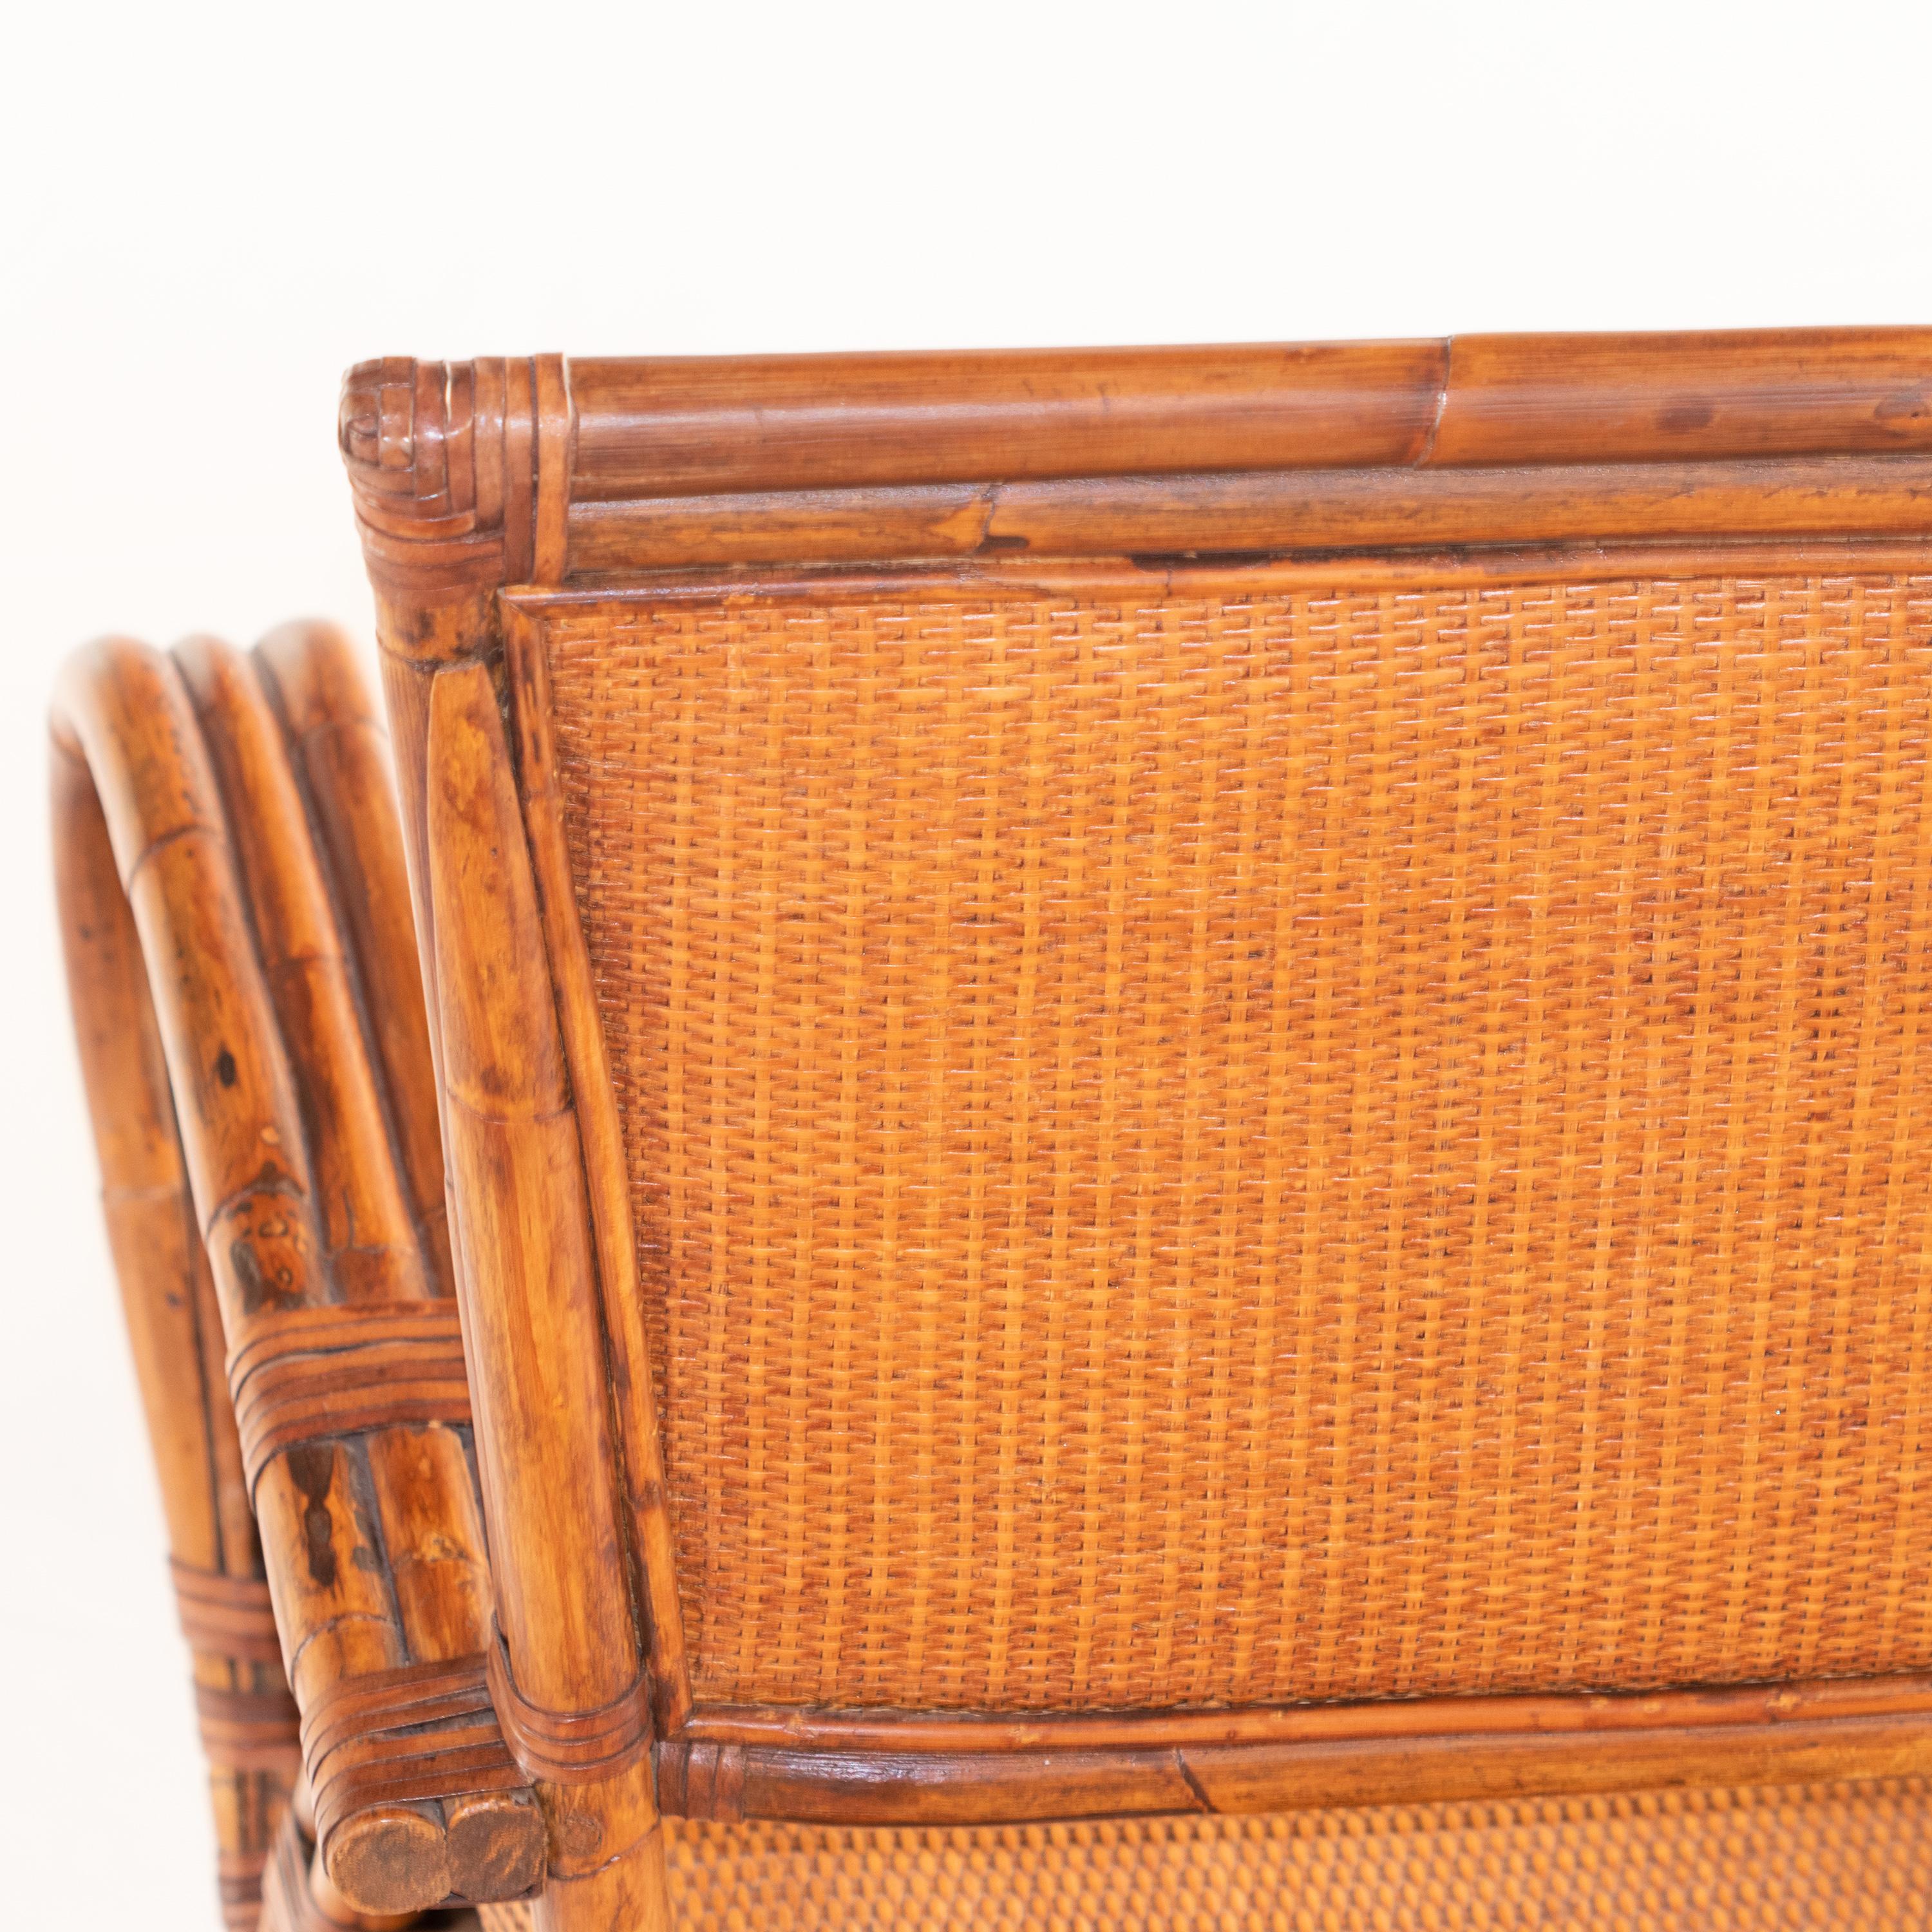 Rattan Split Chair Wood Confortable Modern Asian Modern Kalma Furniture For Sale 5